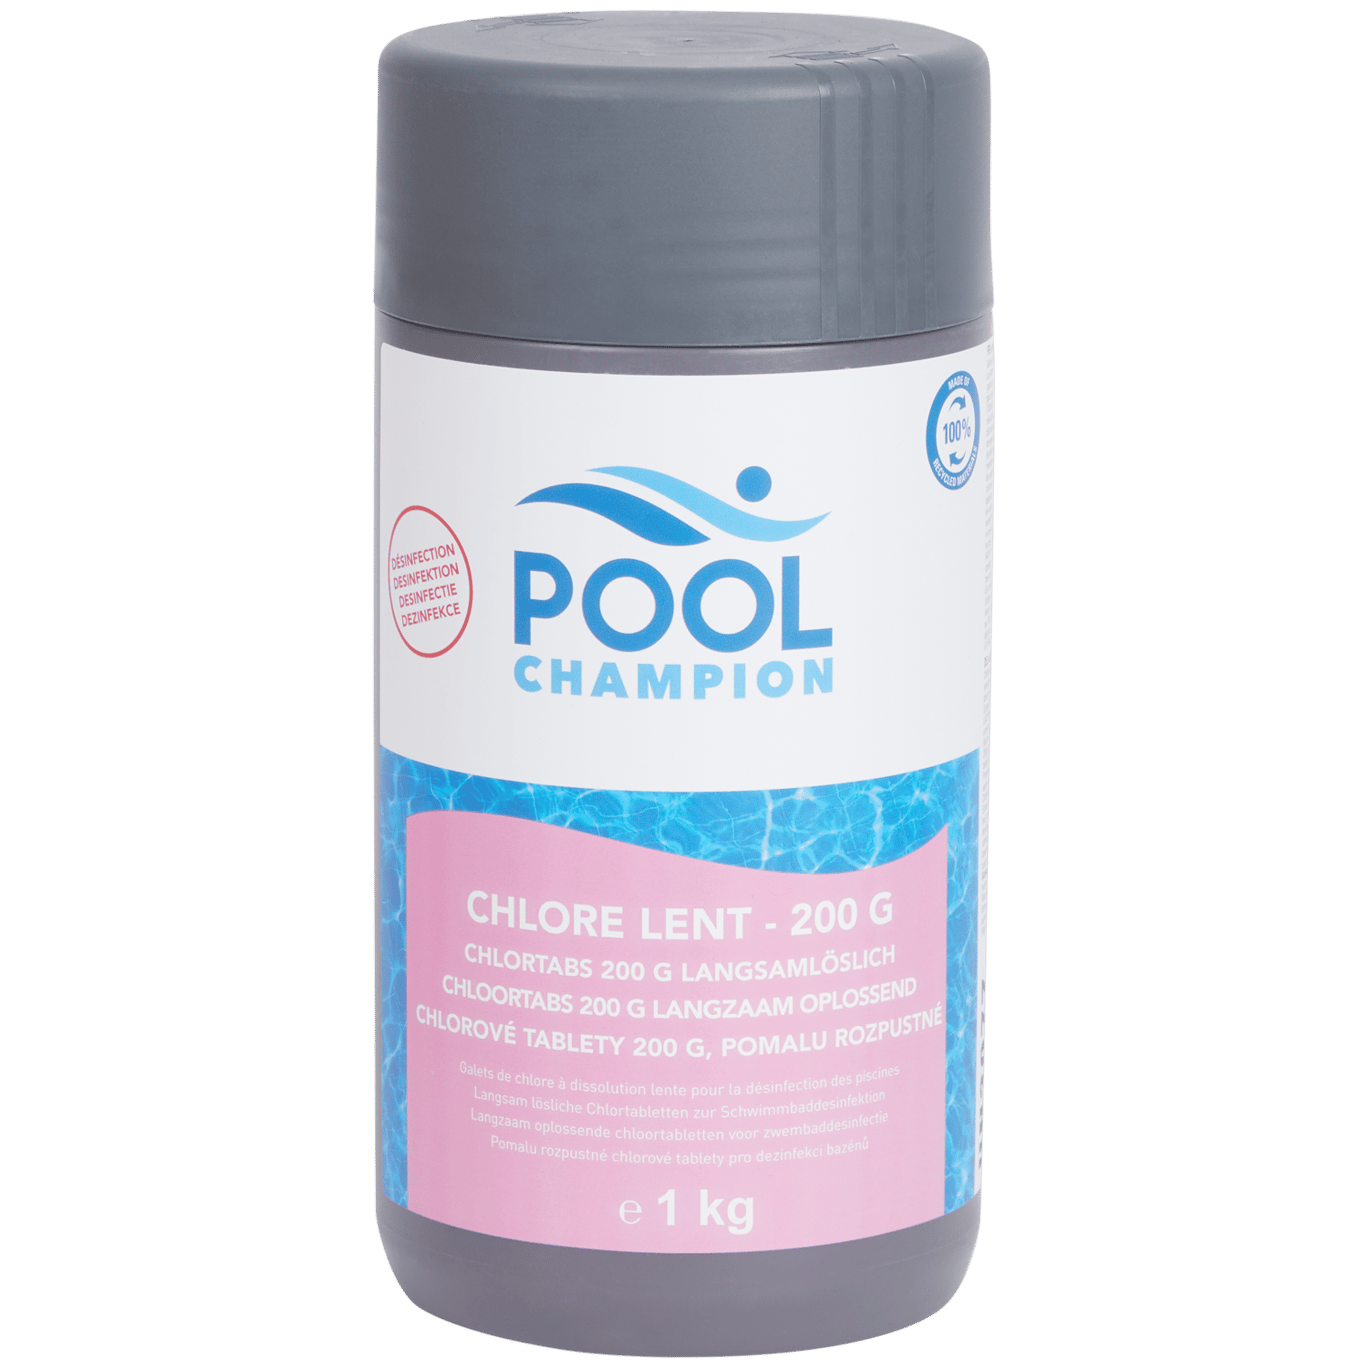 Pool Champion chloortabletten